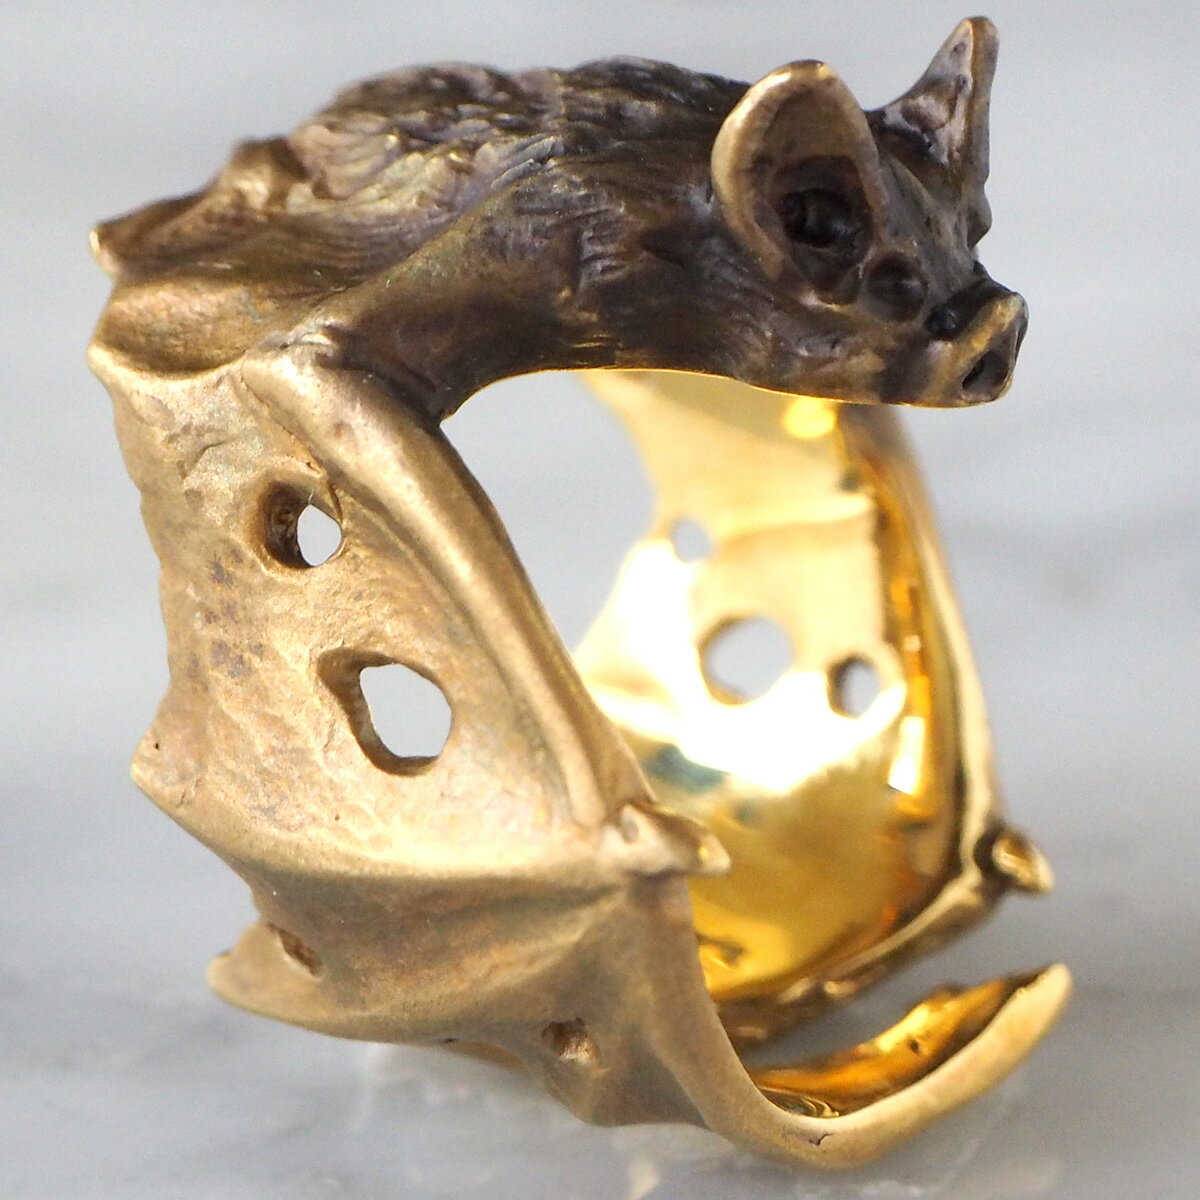 DECOvienya（デコヴィーニャ） 手作りアクセサリー こうもりリング ゴールド [DE-063G] ハンドメイドアクセサリー ジュエリー 動物 アニマル フィギュア 指輪 個性的 クール リアル レディース メンズ ハロウィン 日本製 国産